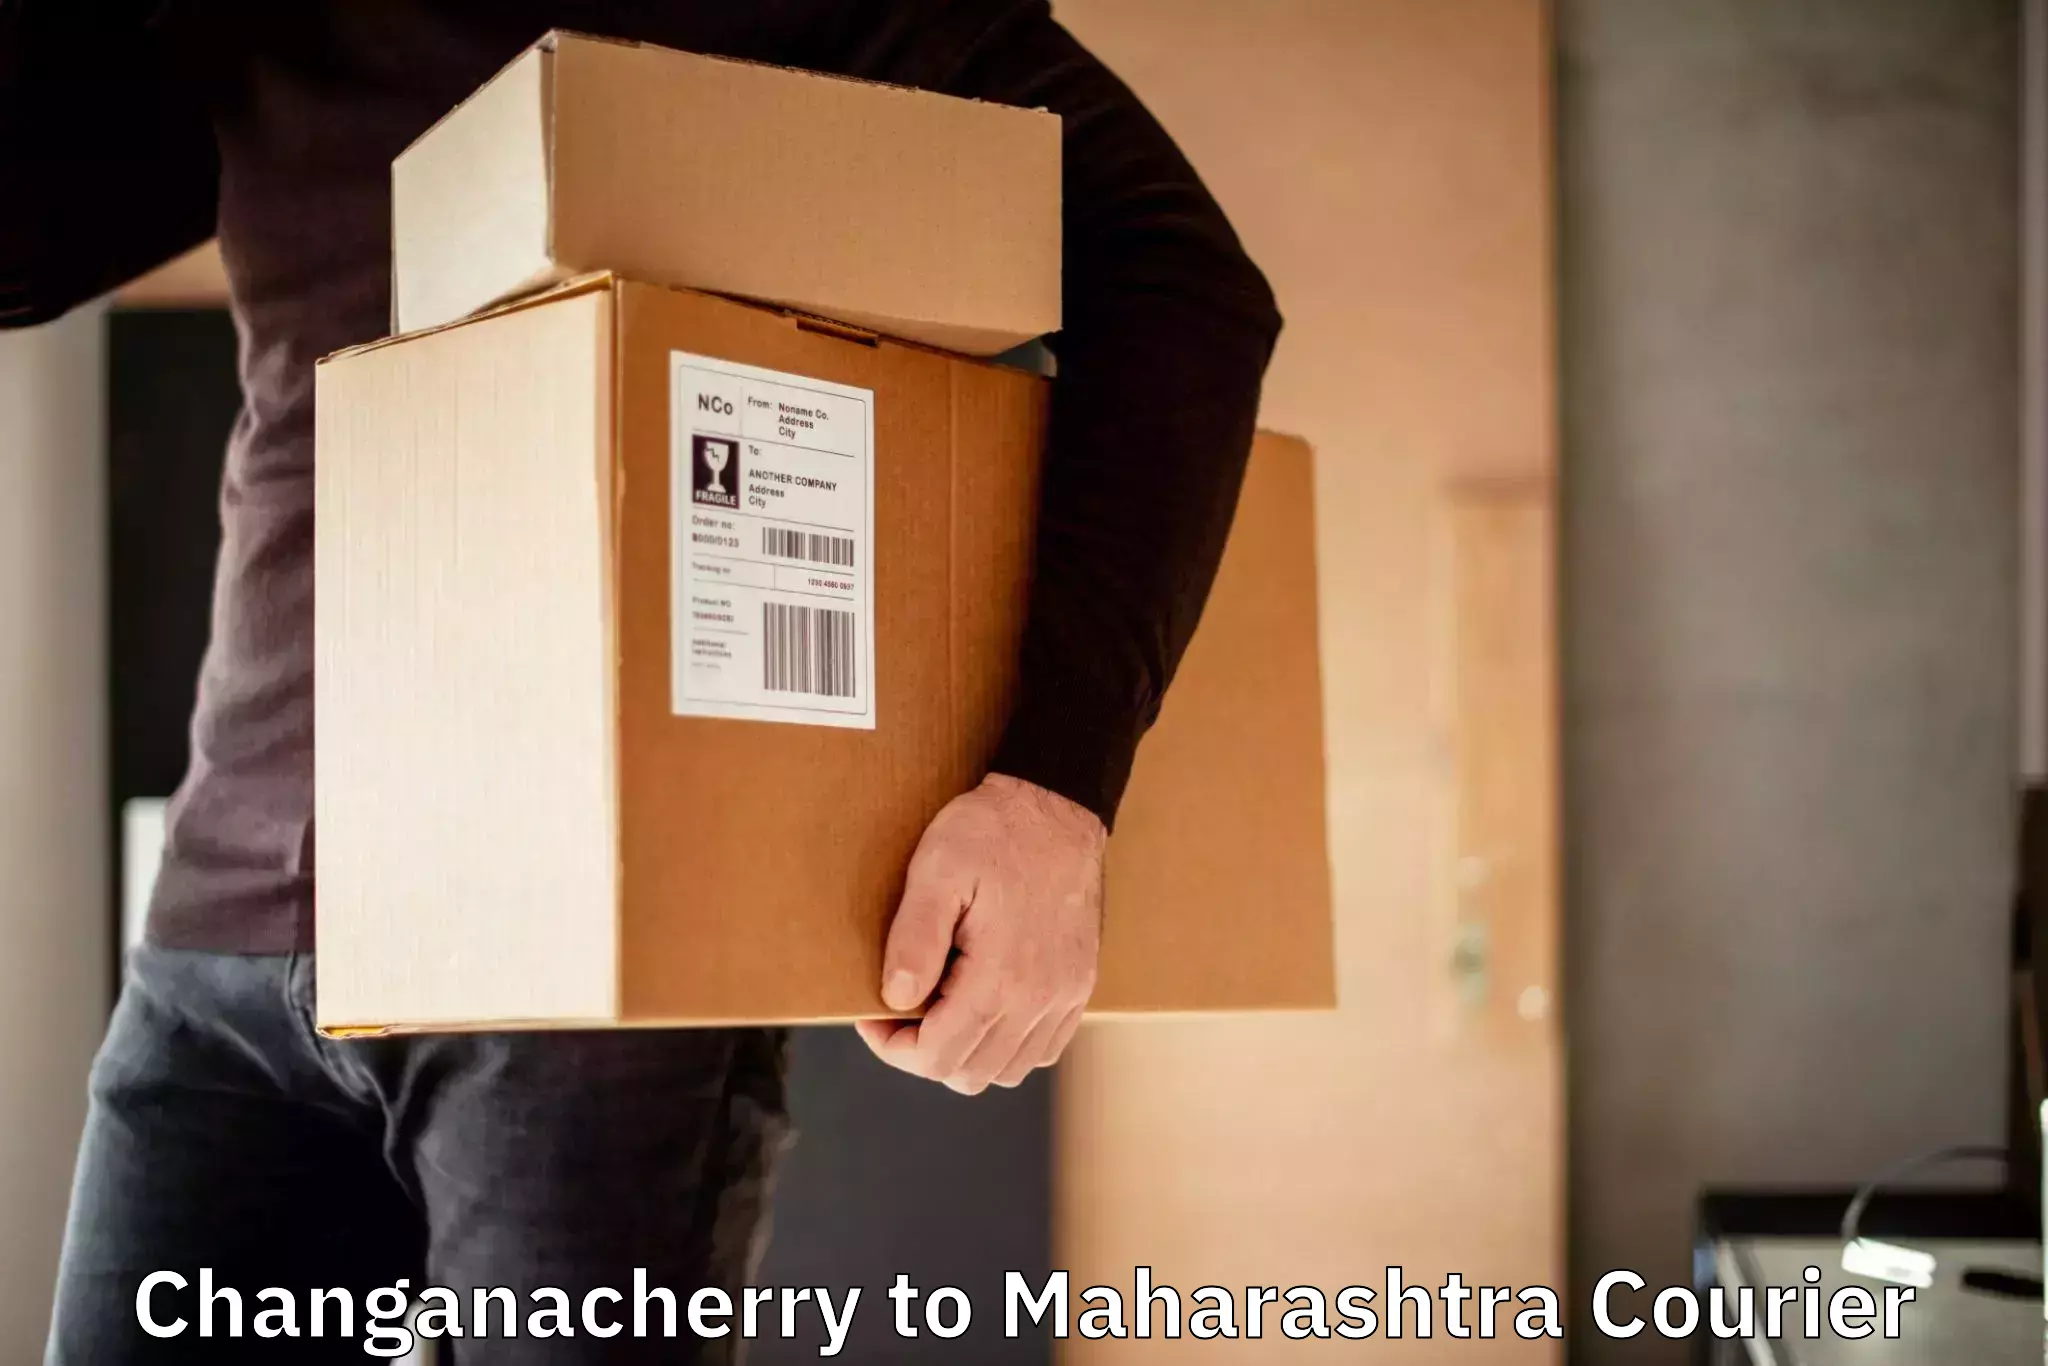 Express courier capabilities Changanacherry to Dadar